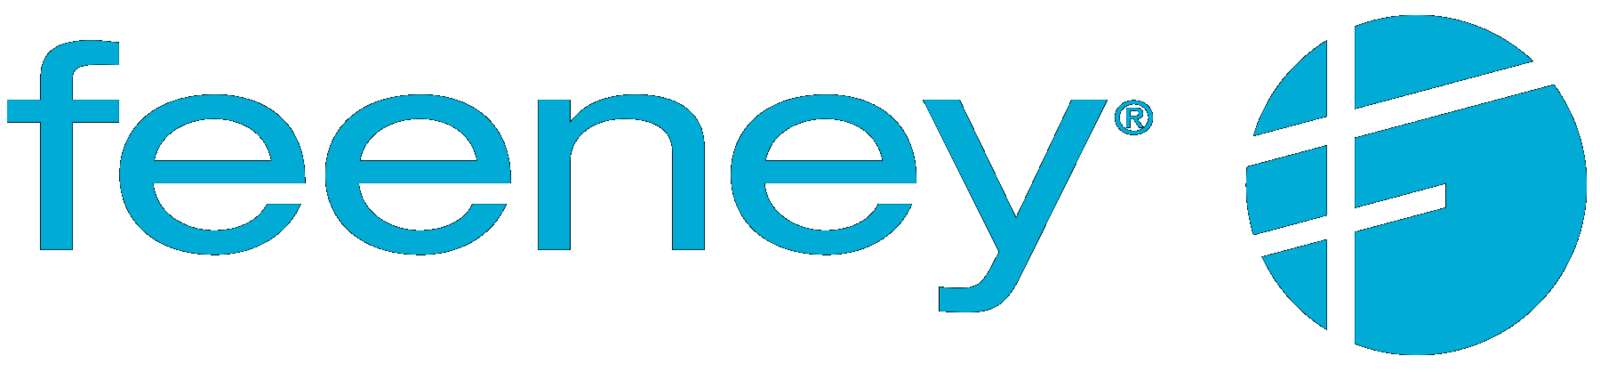 feeney_logo